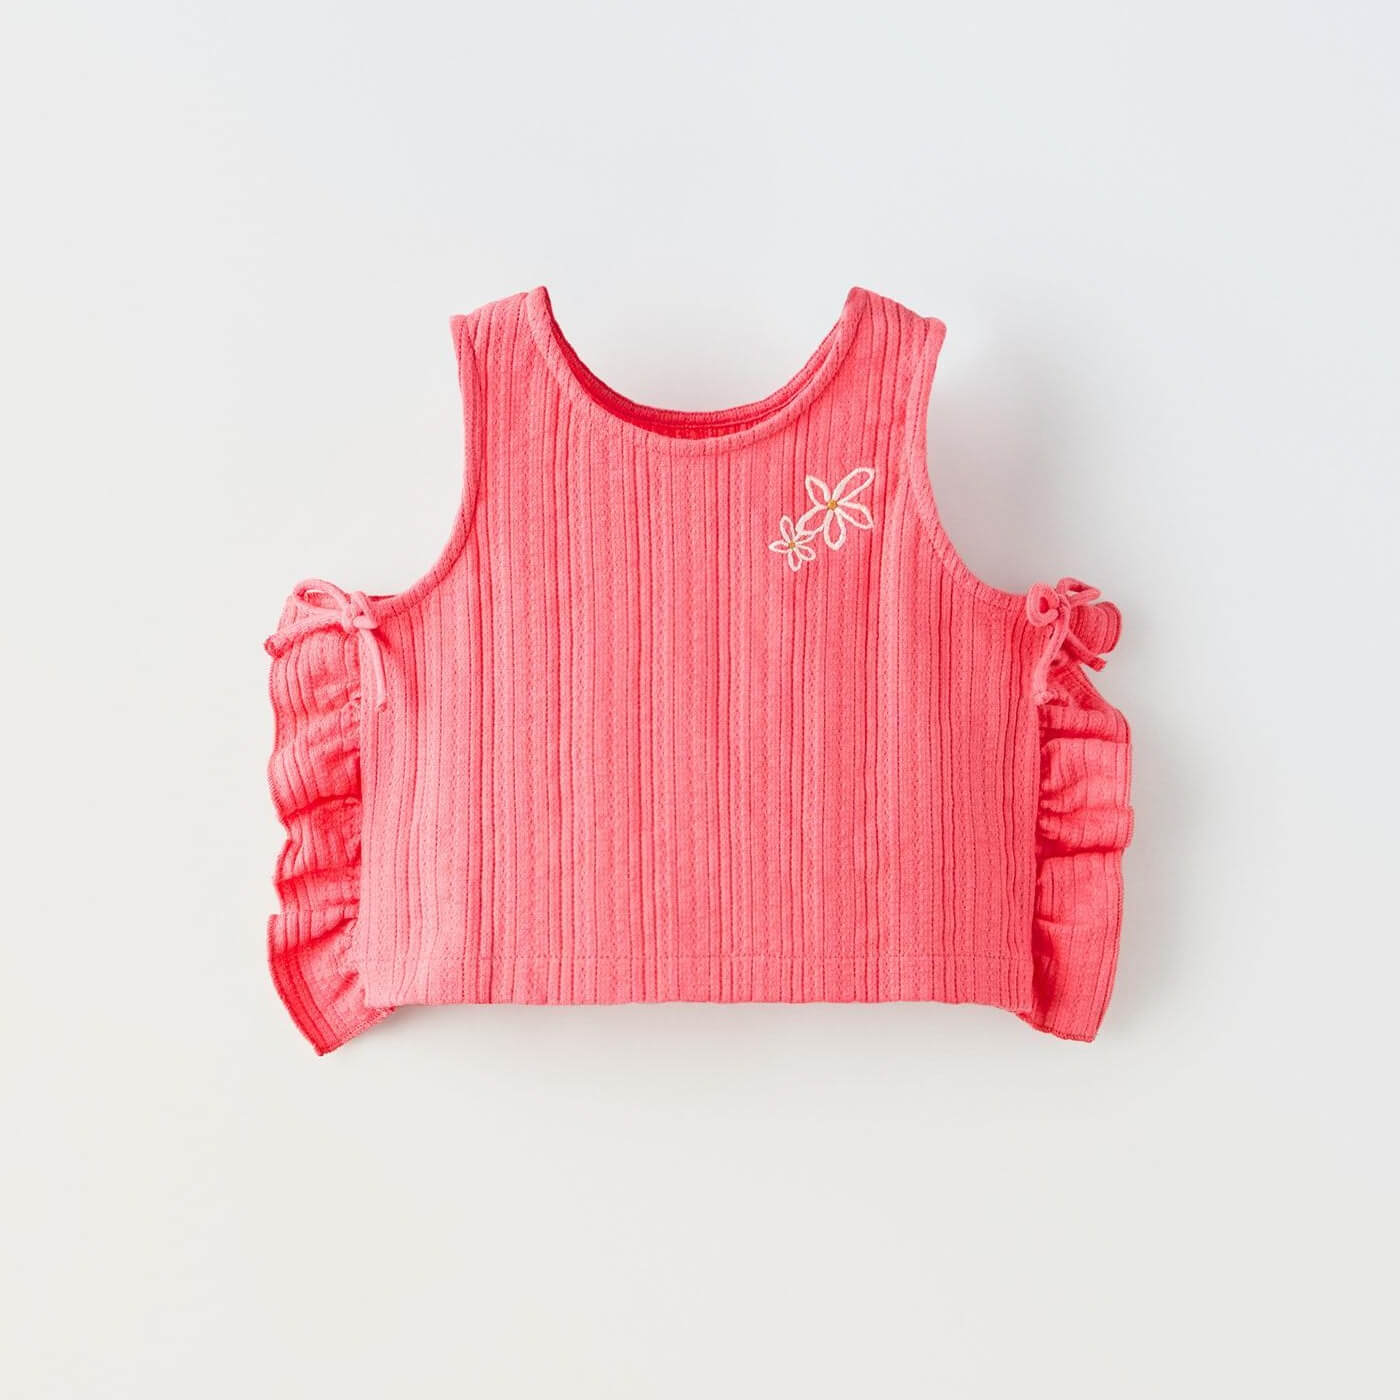 Топ Zara Summer Camp Open-knit Floral Embroidery, ярко-красный топ zara floral knit бежевый